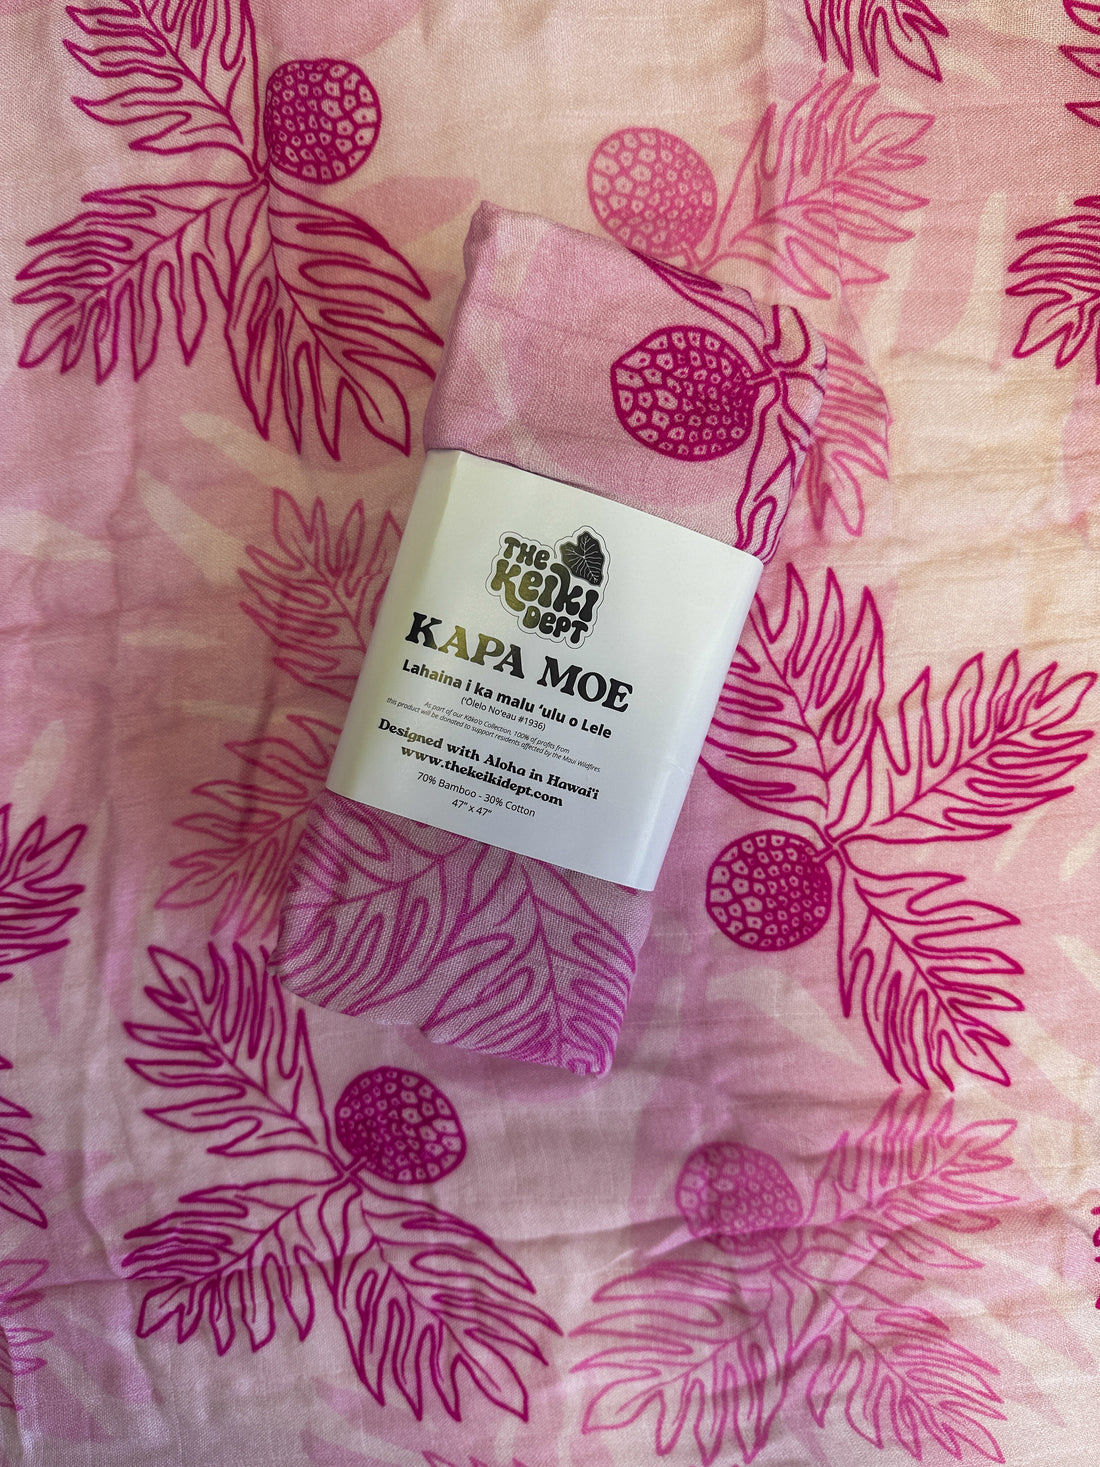 Pop-Up Mākeke - The Keiki Department - Bamboo Muslin Baby Swaddle Blanket - Maui Pink Ulu o Lele